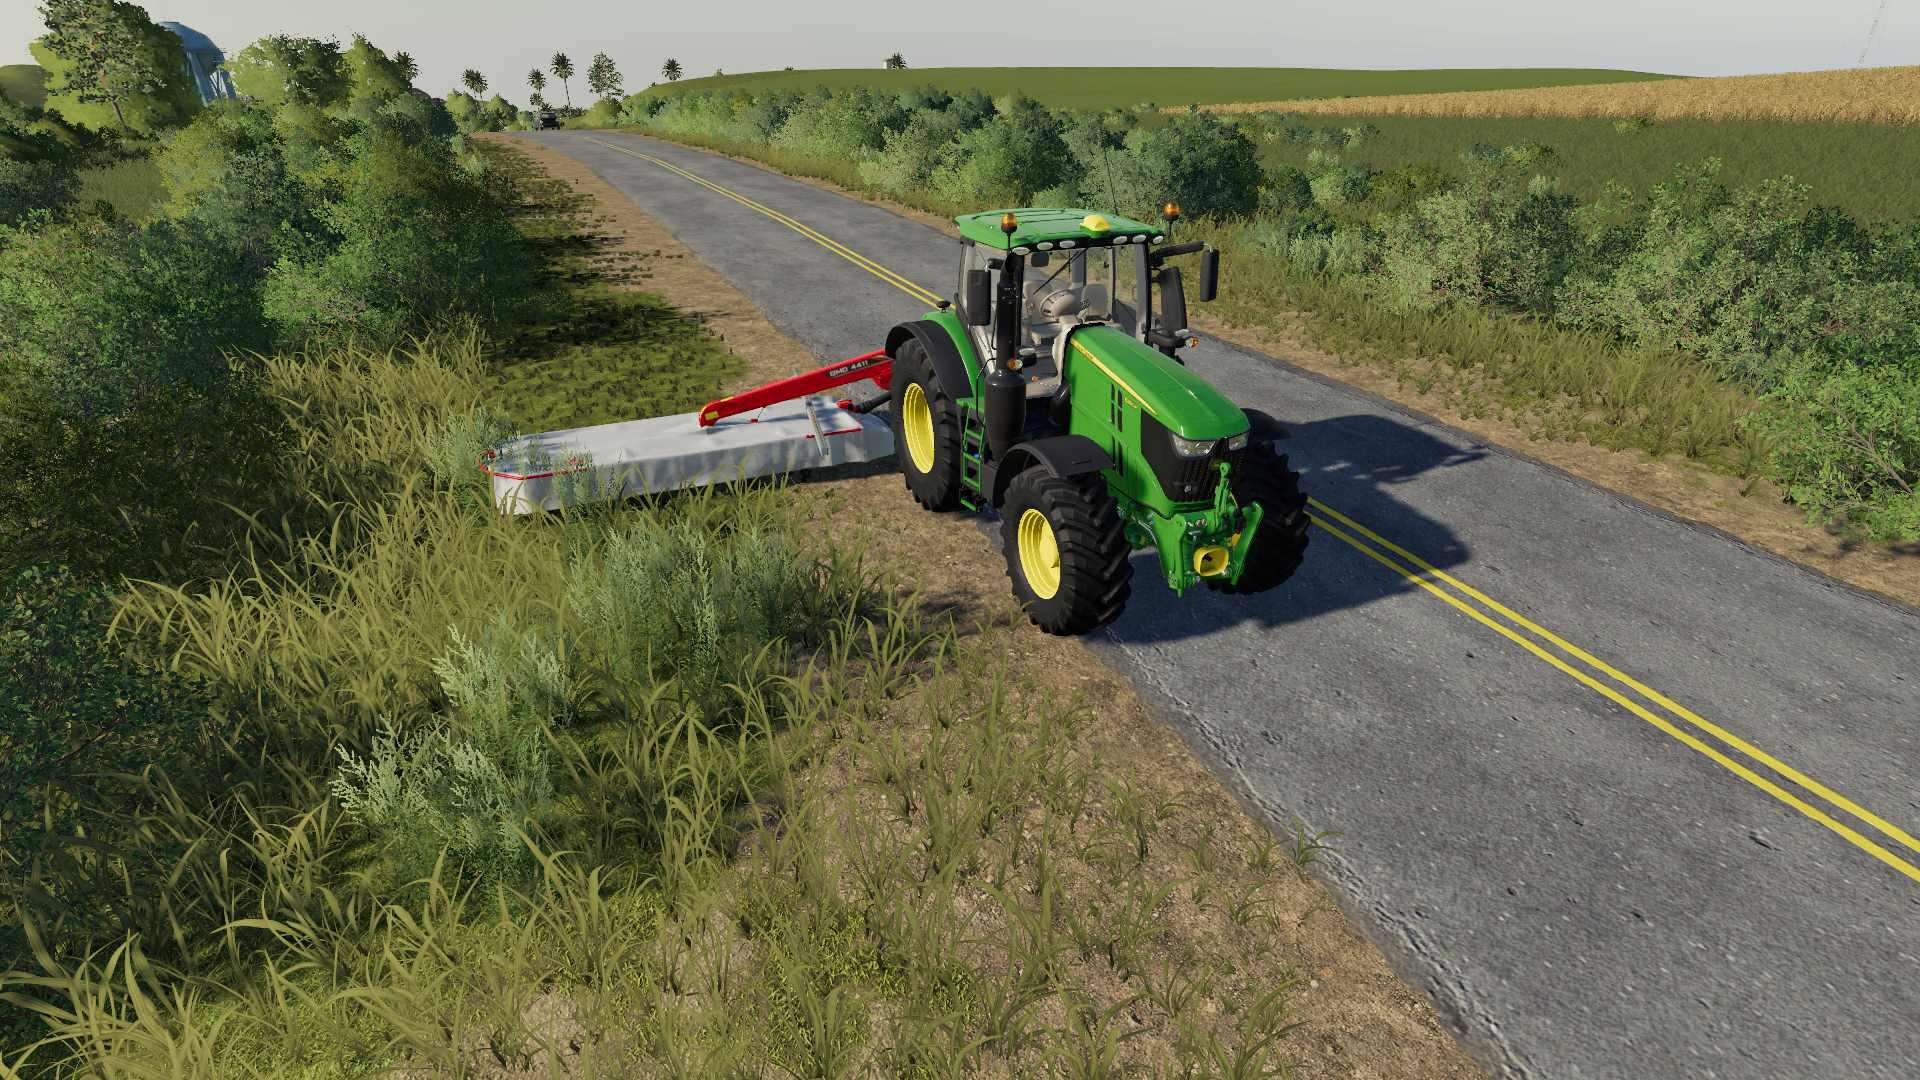 LS19 Real Mower v1.0 - Farming Simulator 22 mod, LS22 Mod download! 